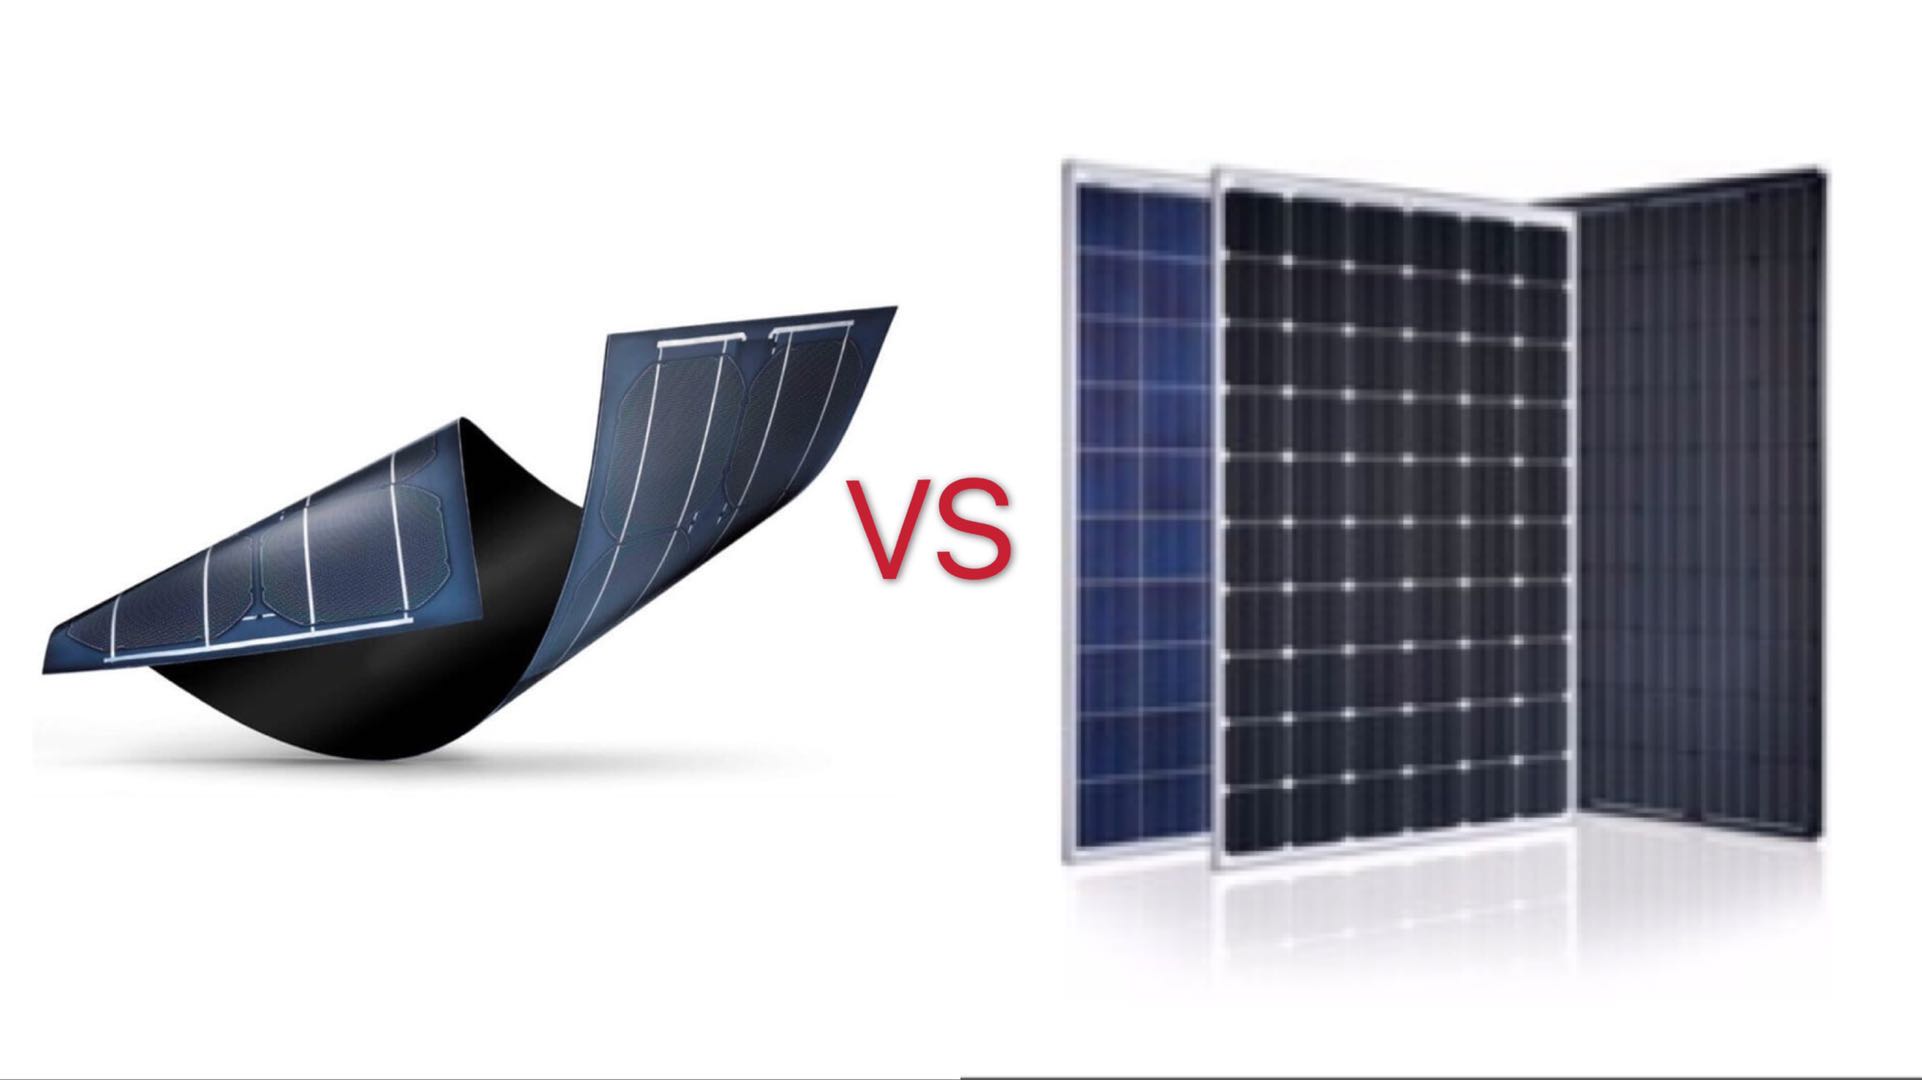 Thin film solar panel VS Crystalline silicon solar panel